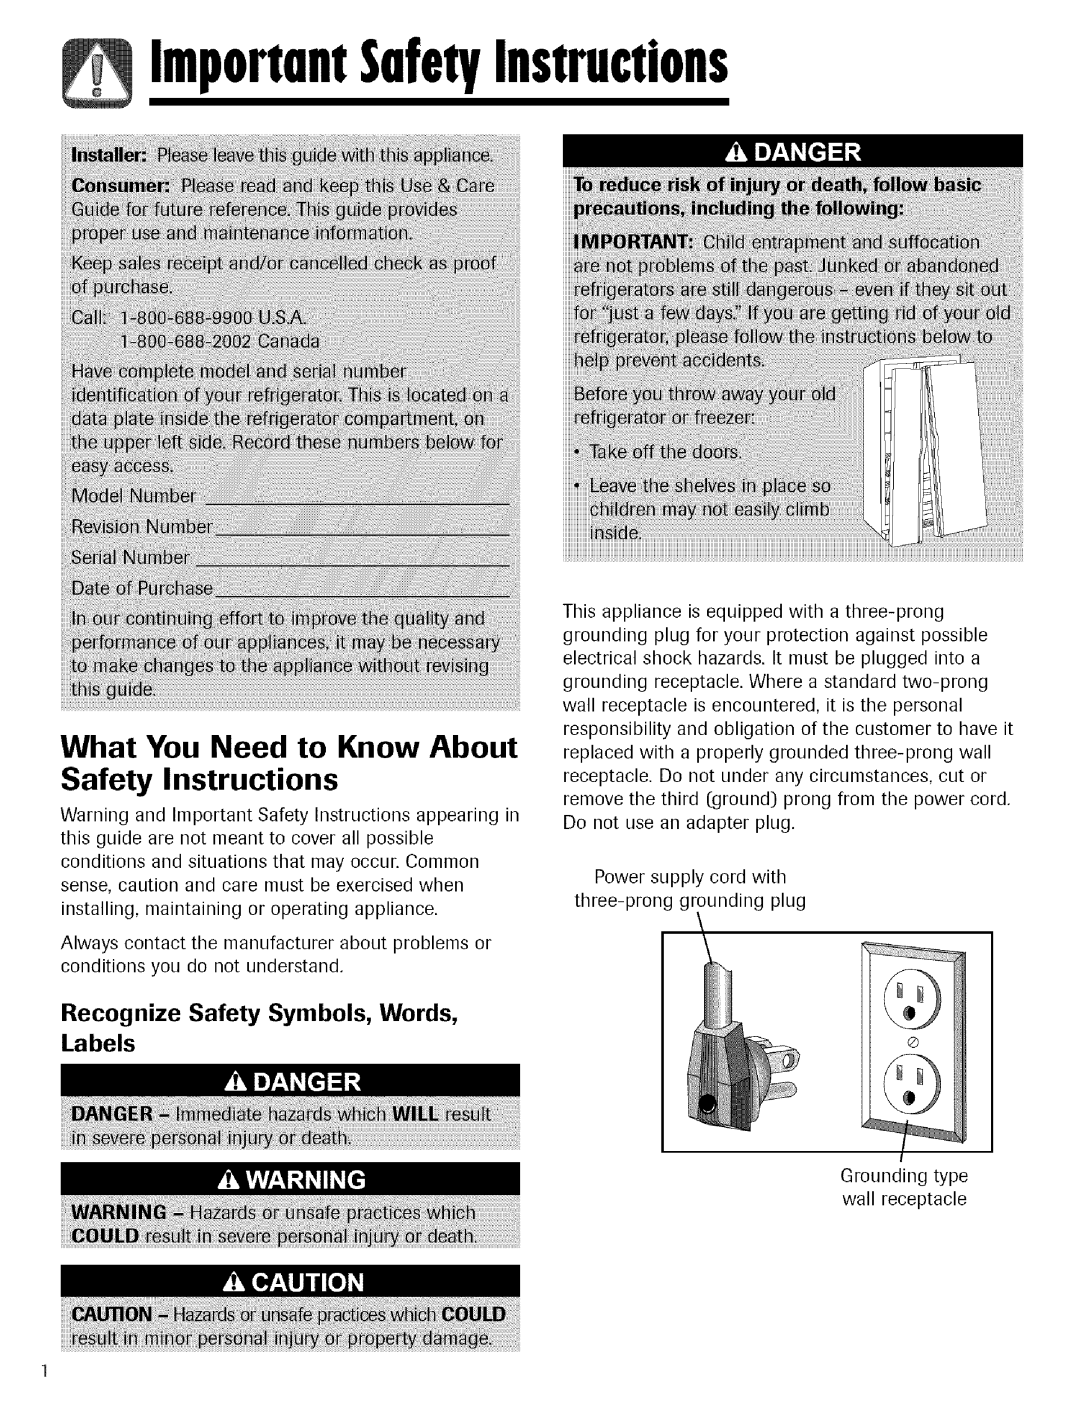 Maytag Refrigerator warranty ImportnntSnfetyInstructions, Safety Instructions, Recognize Safety Symbols, Words Labels 